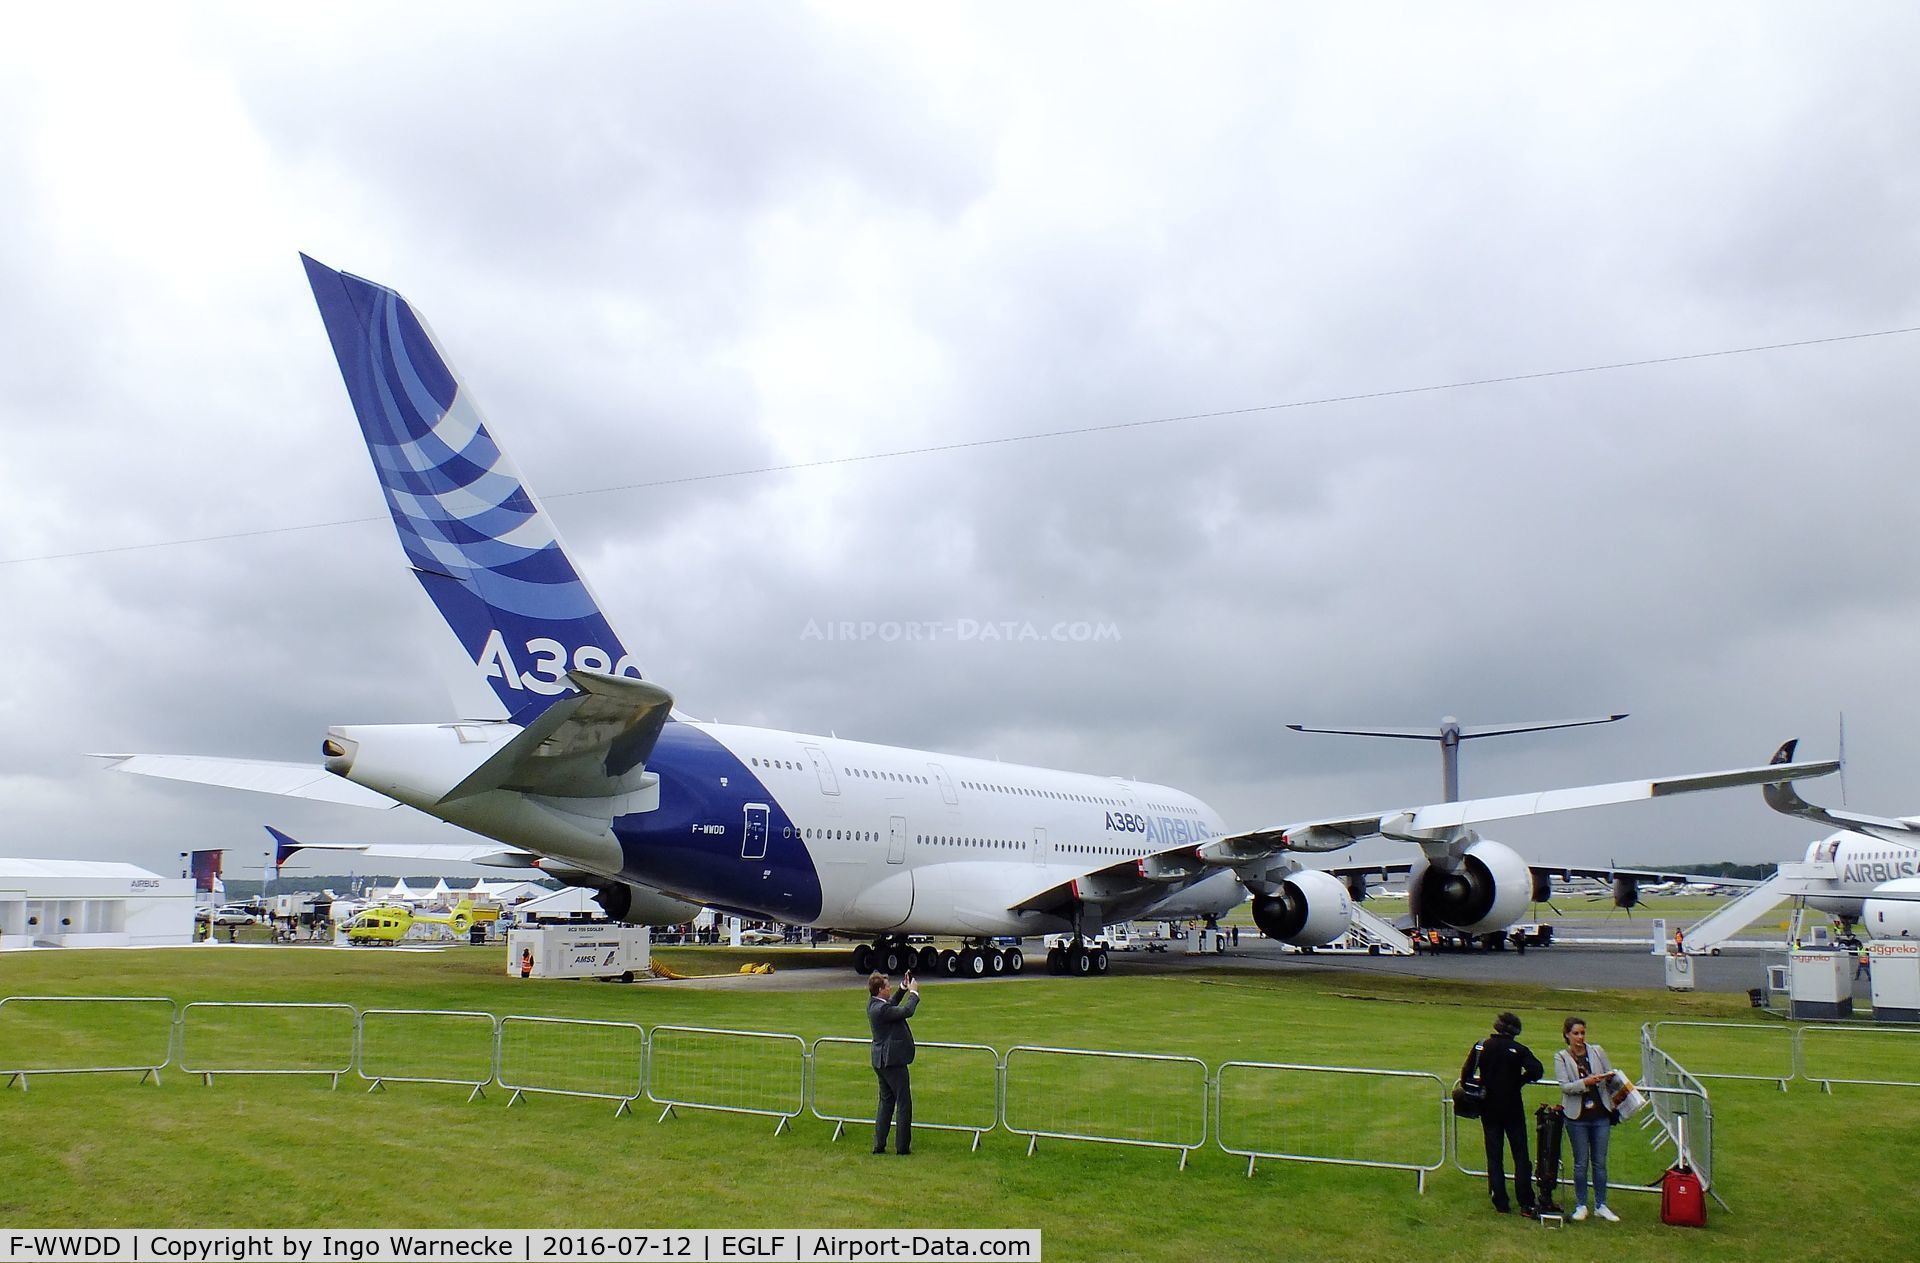 F-WWDD, 2005 Airbus A380-861 C/N 004, Airbus A380-861 at Farnborough International 2016